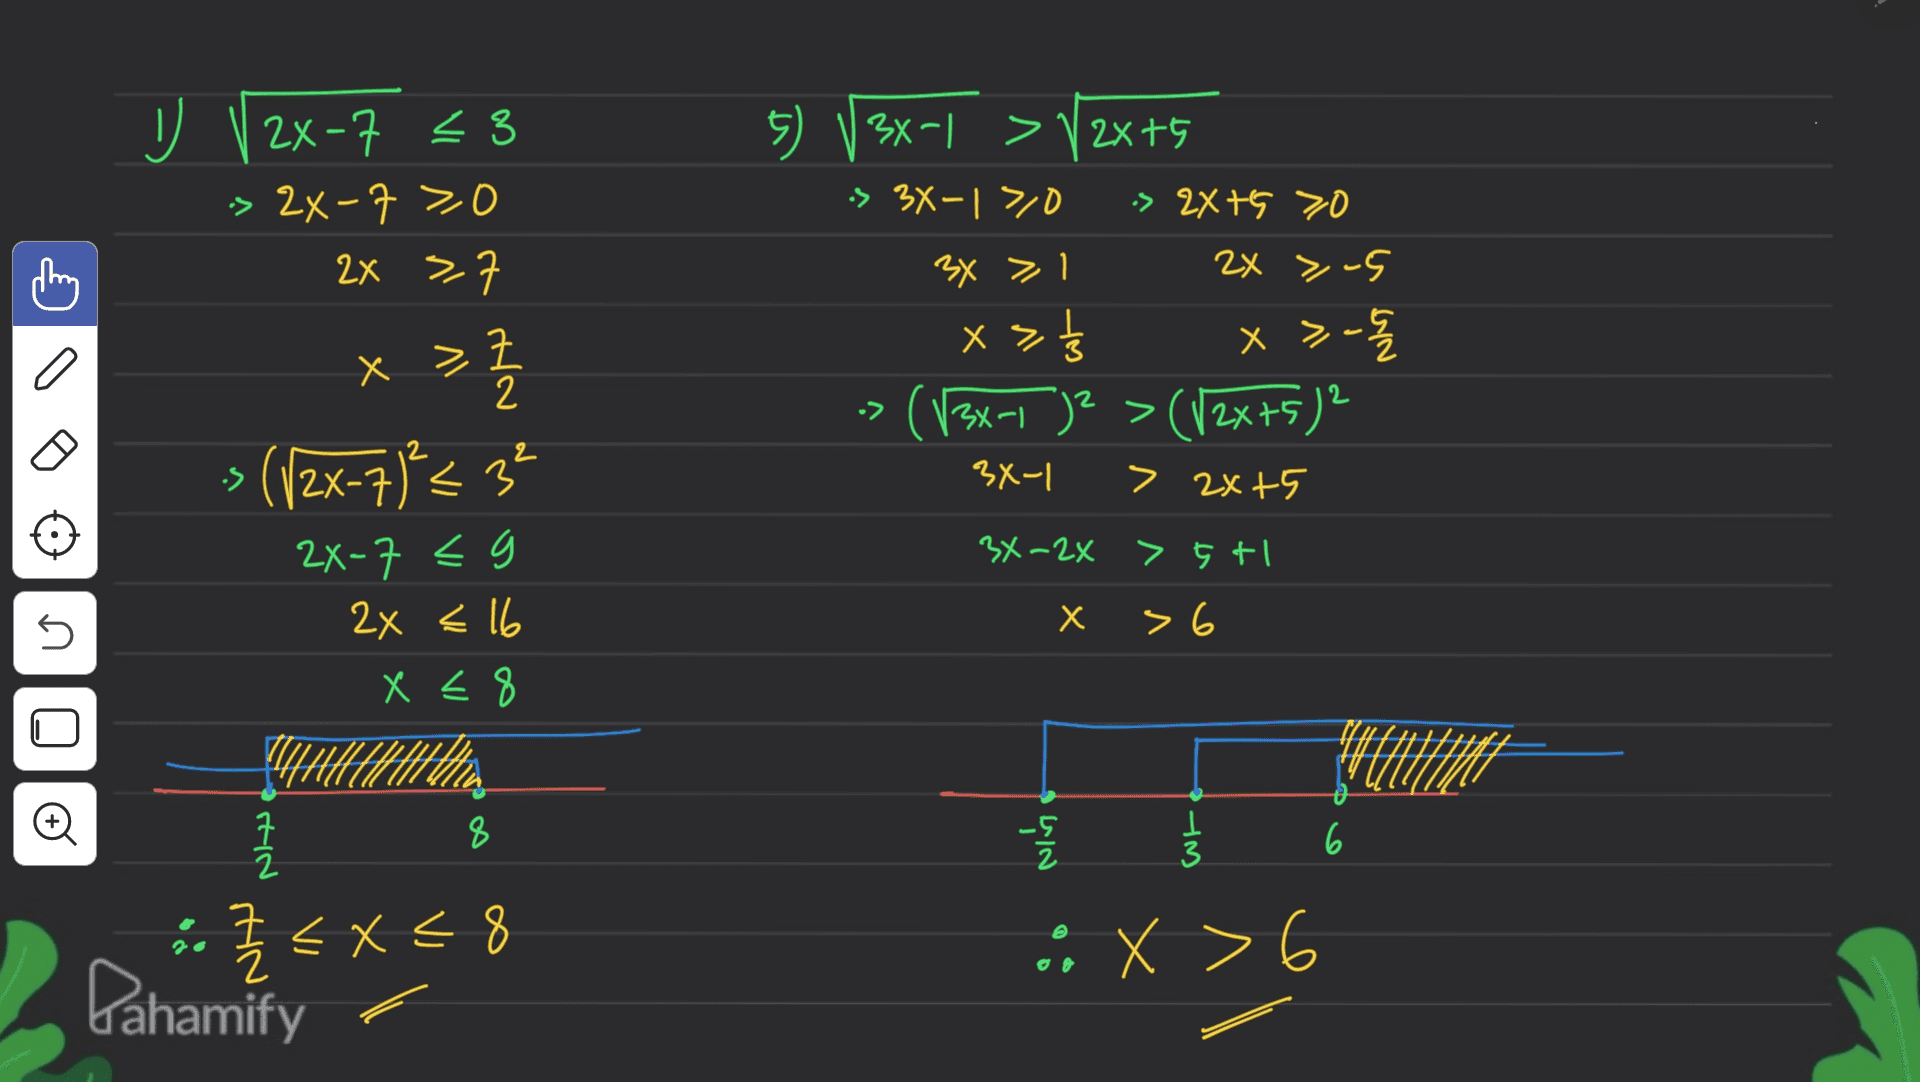 J 2X-7 <3 -> 2X-7 >0 ok StXZ < 2X 37 12 XE 5) V3x-1 > -> 2X+5 => 3X-1 >/D 2X >-5 xst -> (13X-1 )2 > (12x+5)2 3x-1 > 2x+5 35-48 X > Z x > 국 2 • > (12X-7433 3x-2x > 5 tl 2X-7 < 2x = 16 n х >6 8 Ž x U Vühtliftit o } 8 Nis 114 6 2 8 X = < X < 8 2 g < X : 9 <X Pahamify 